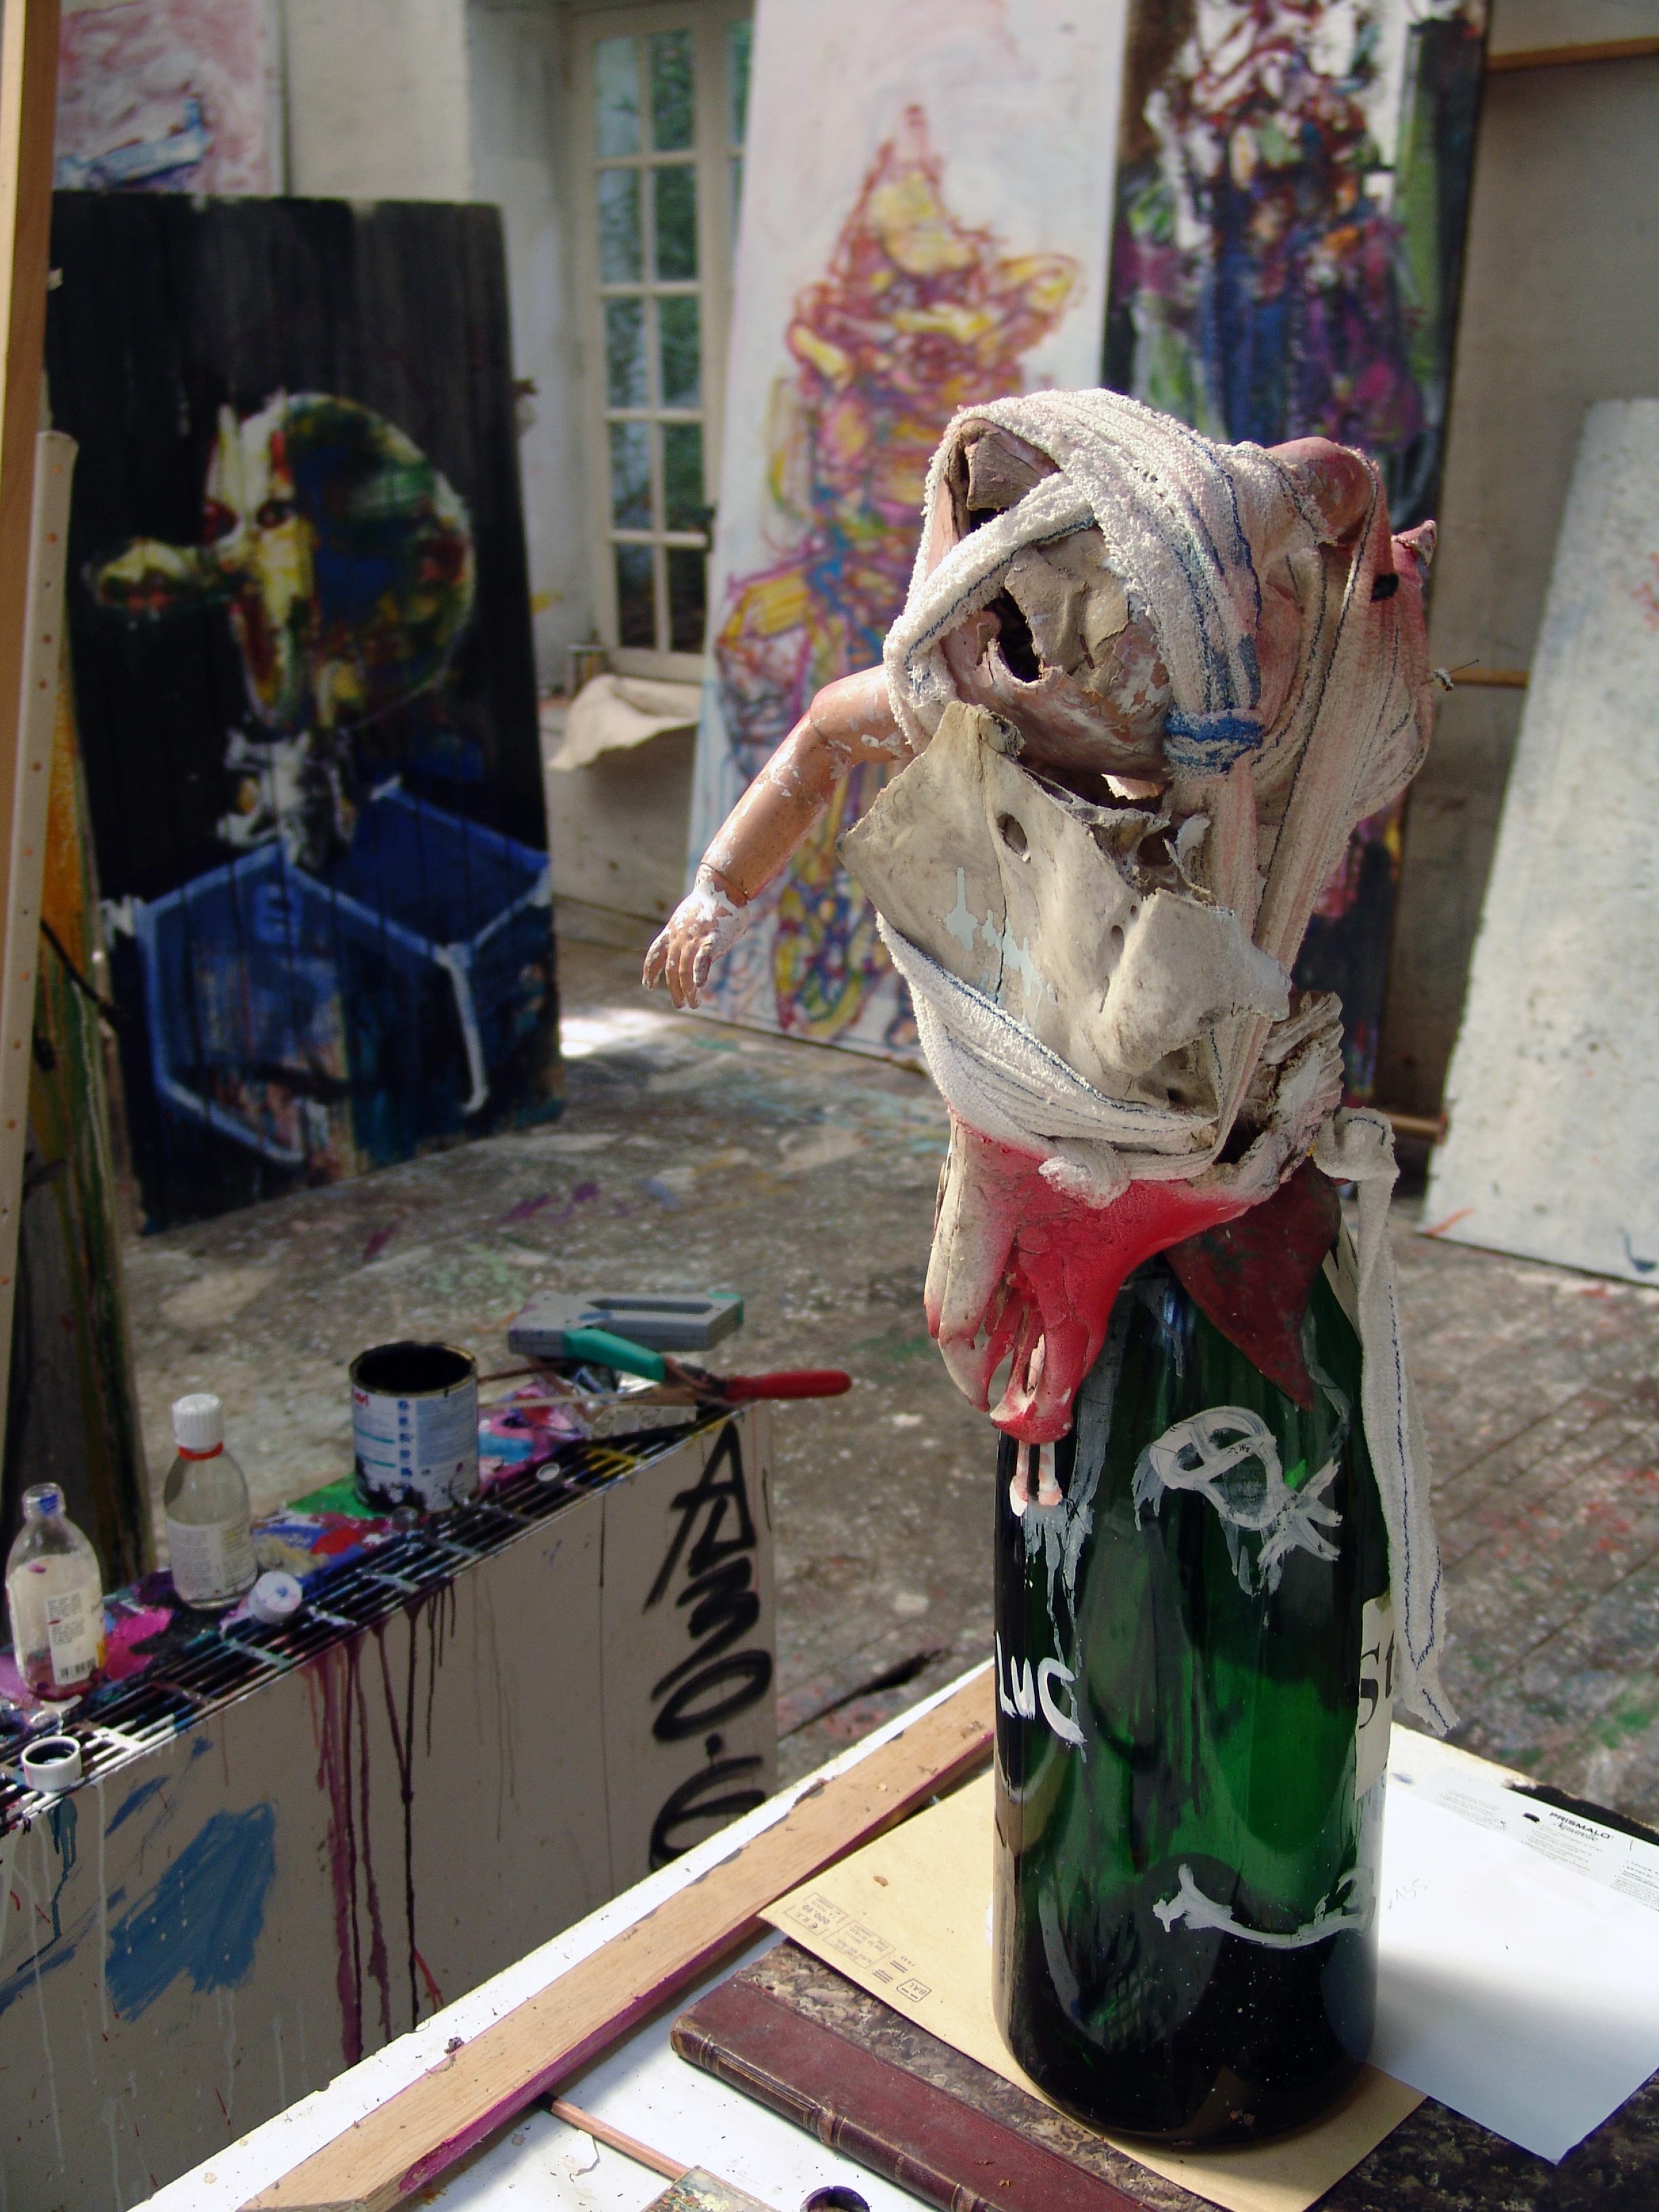 Sculptures at Dado’s studio in 2009